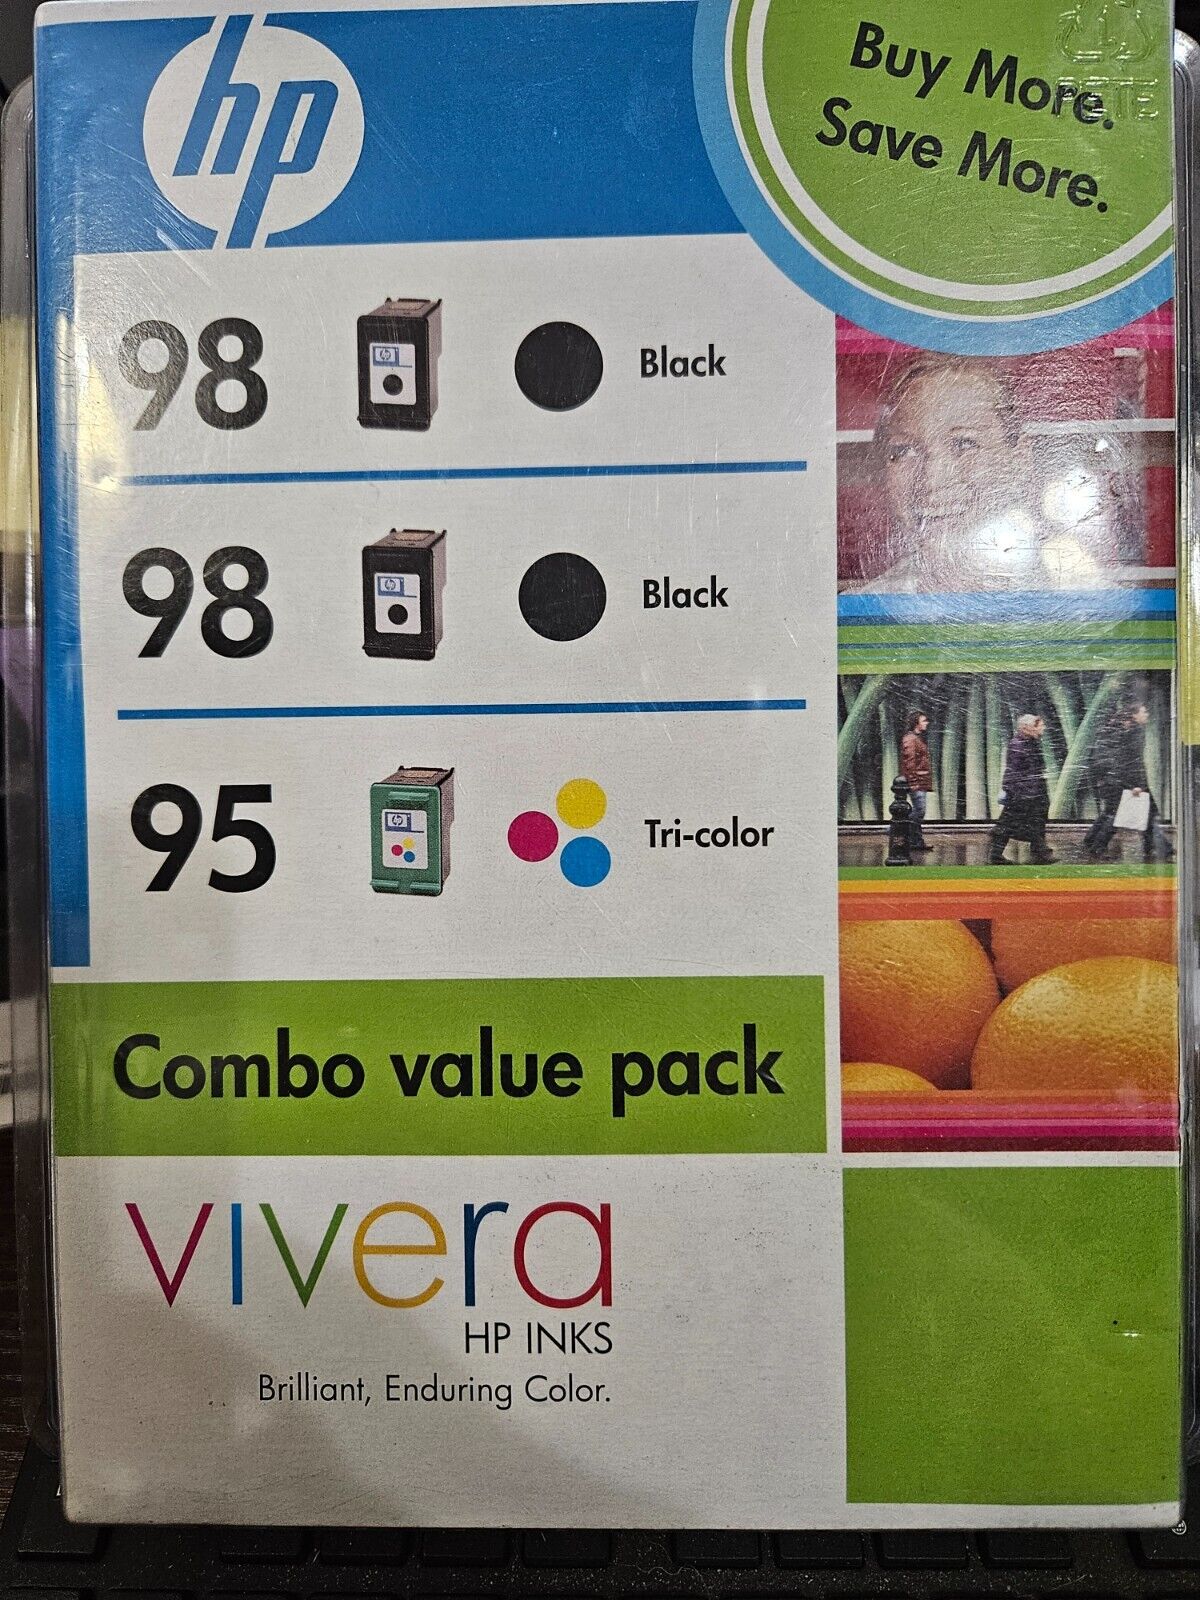 HP VIVERA PRINTER INK 3-CARTRIDGE COMBO PACK, 98 98 95, 4/10, NEW IN PACKAGE